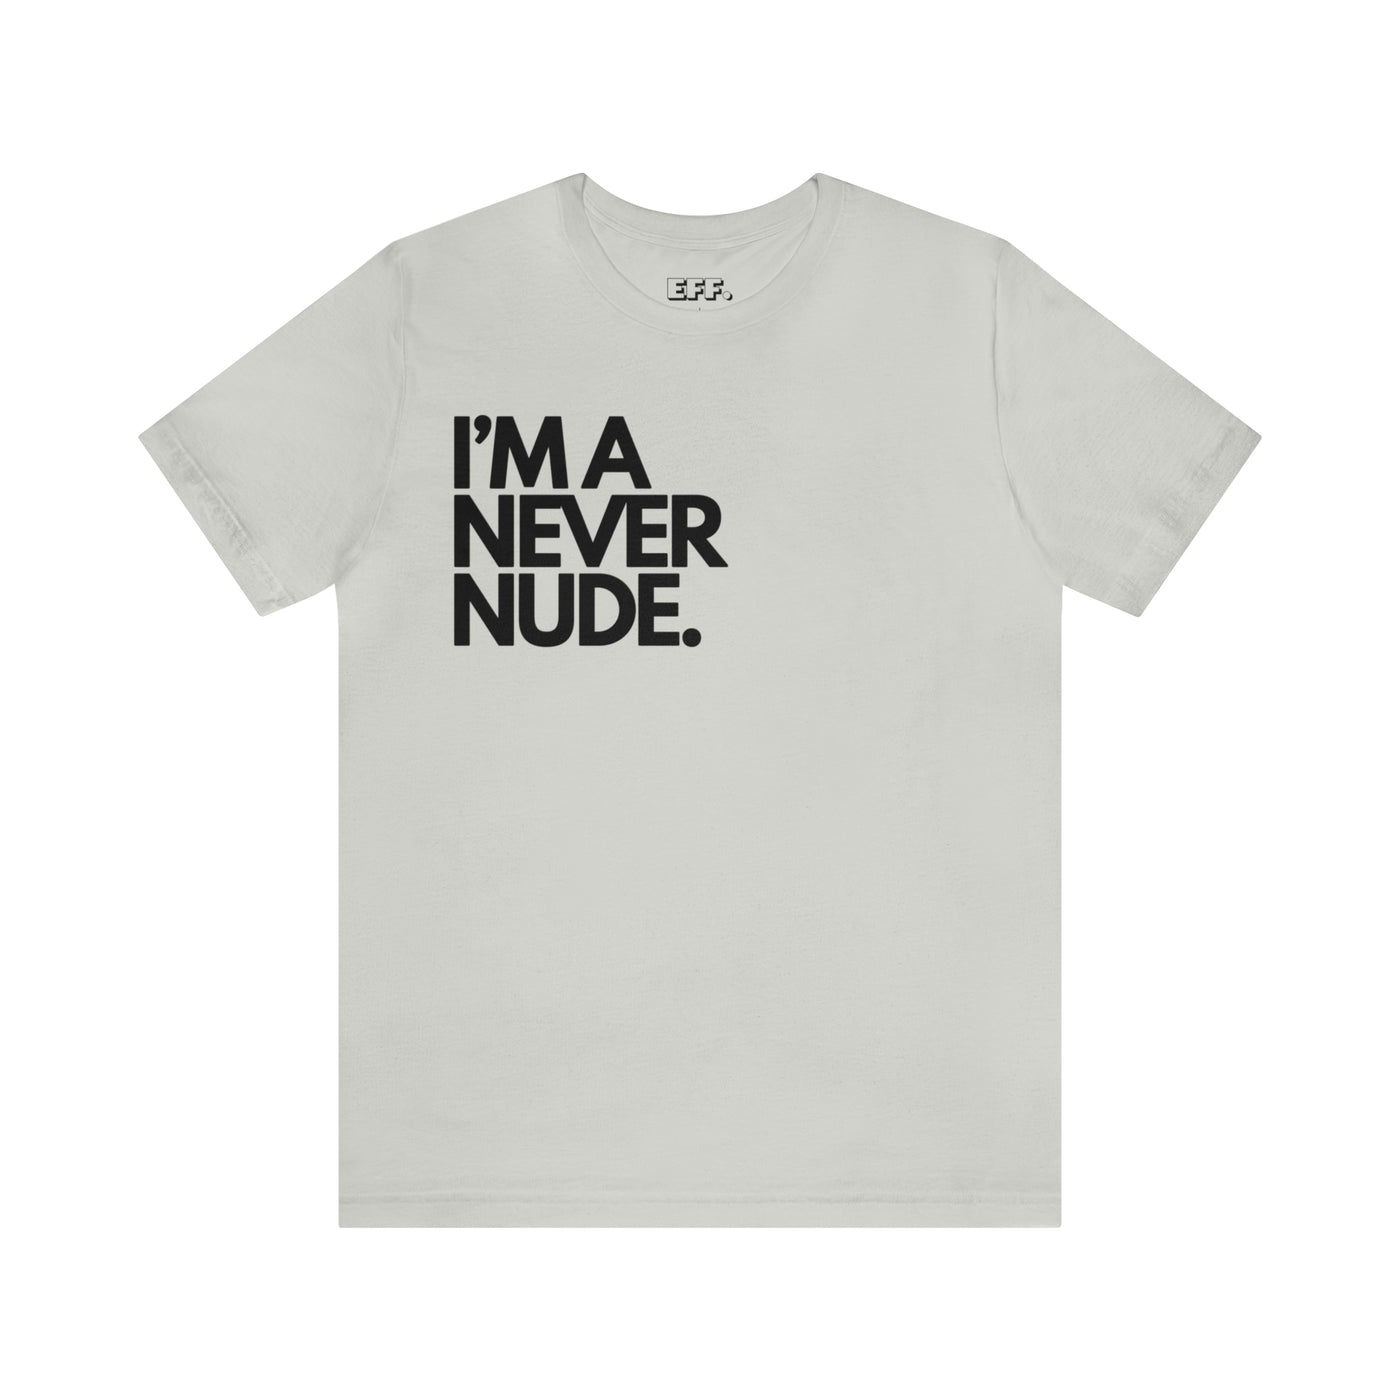 I'm A Never Nude.